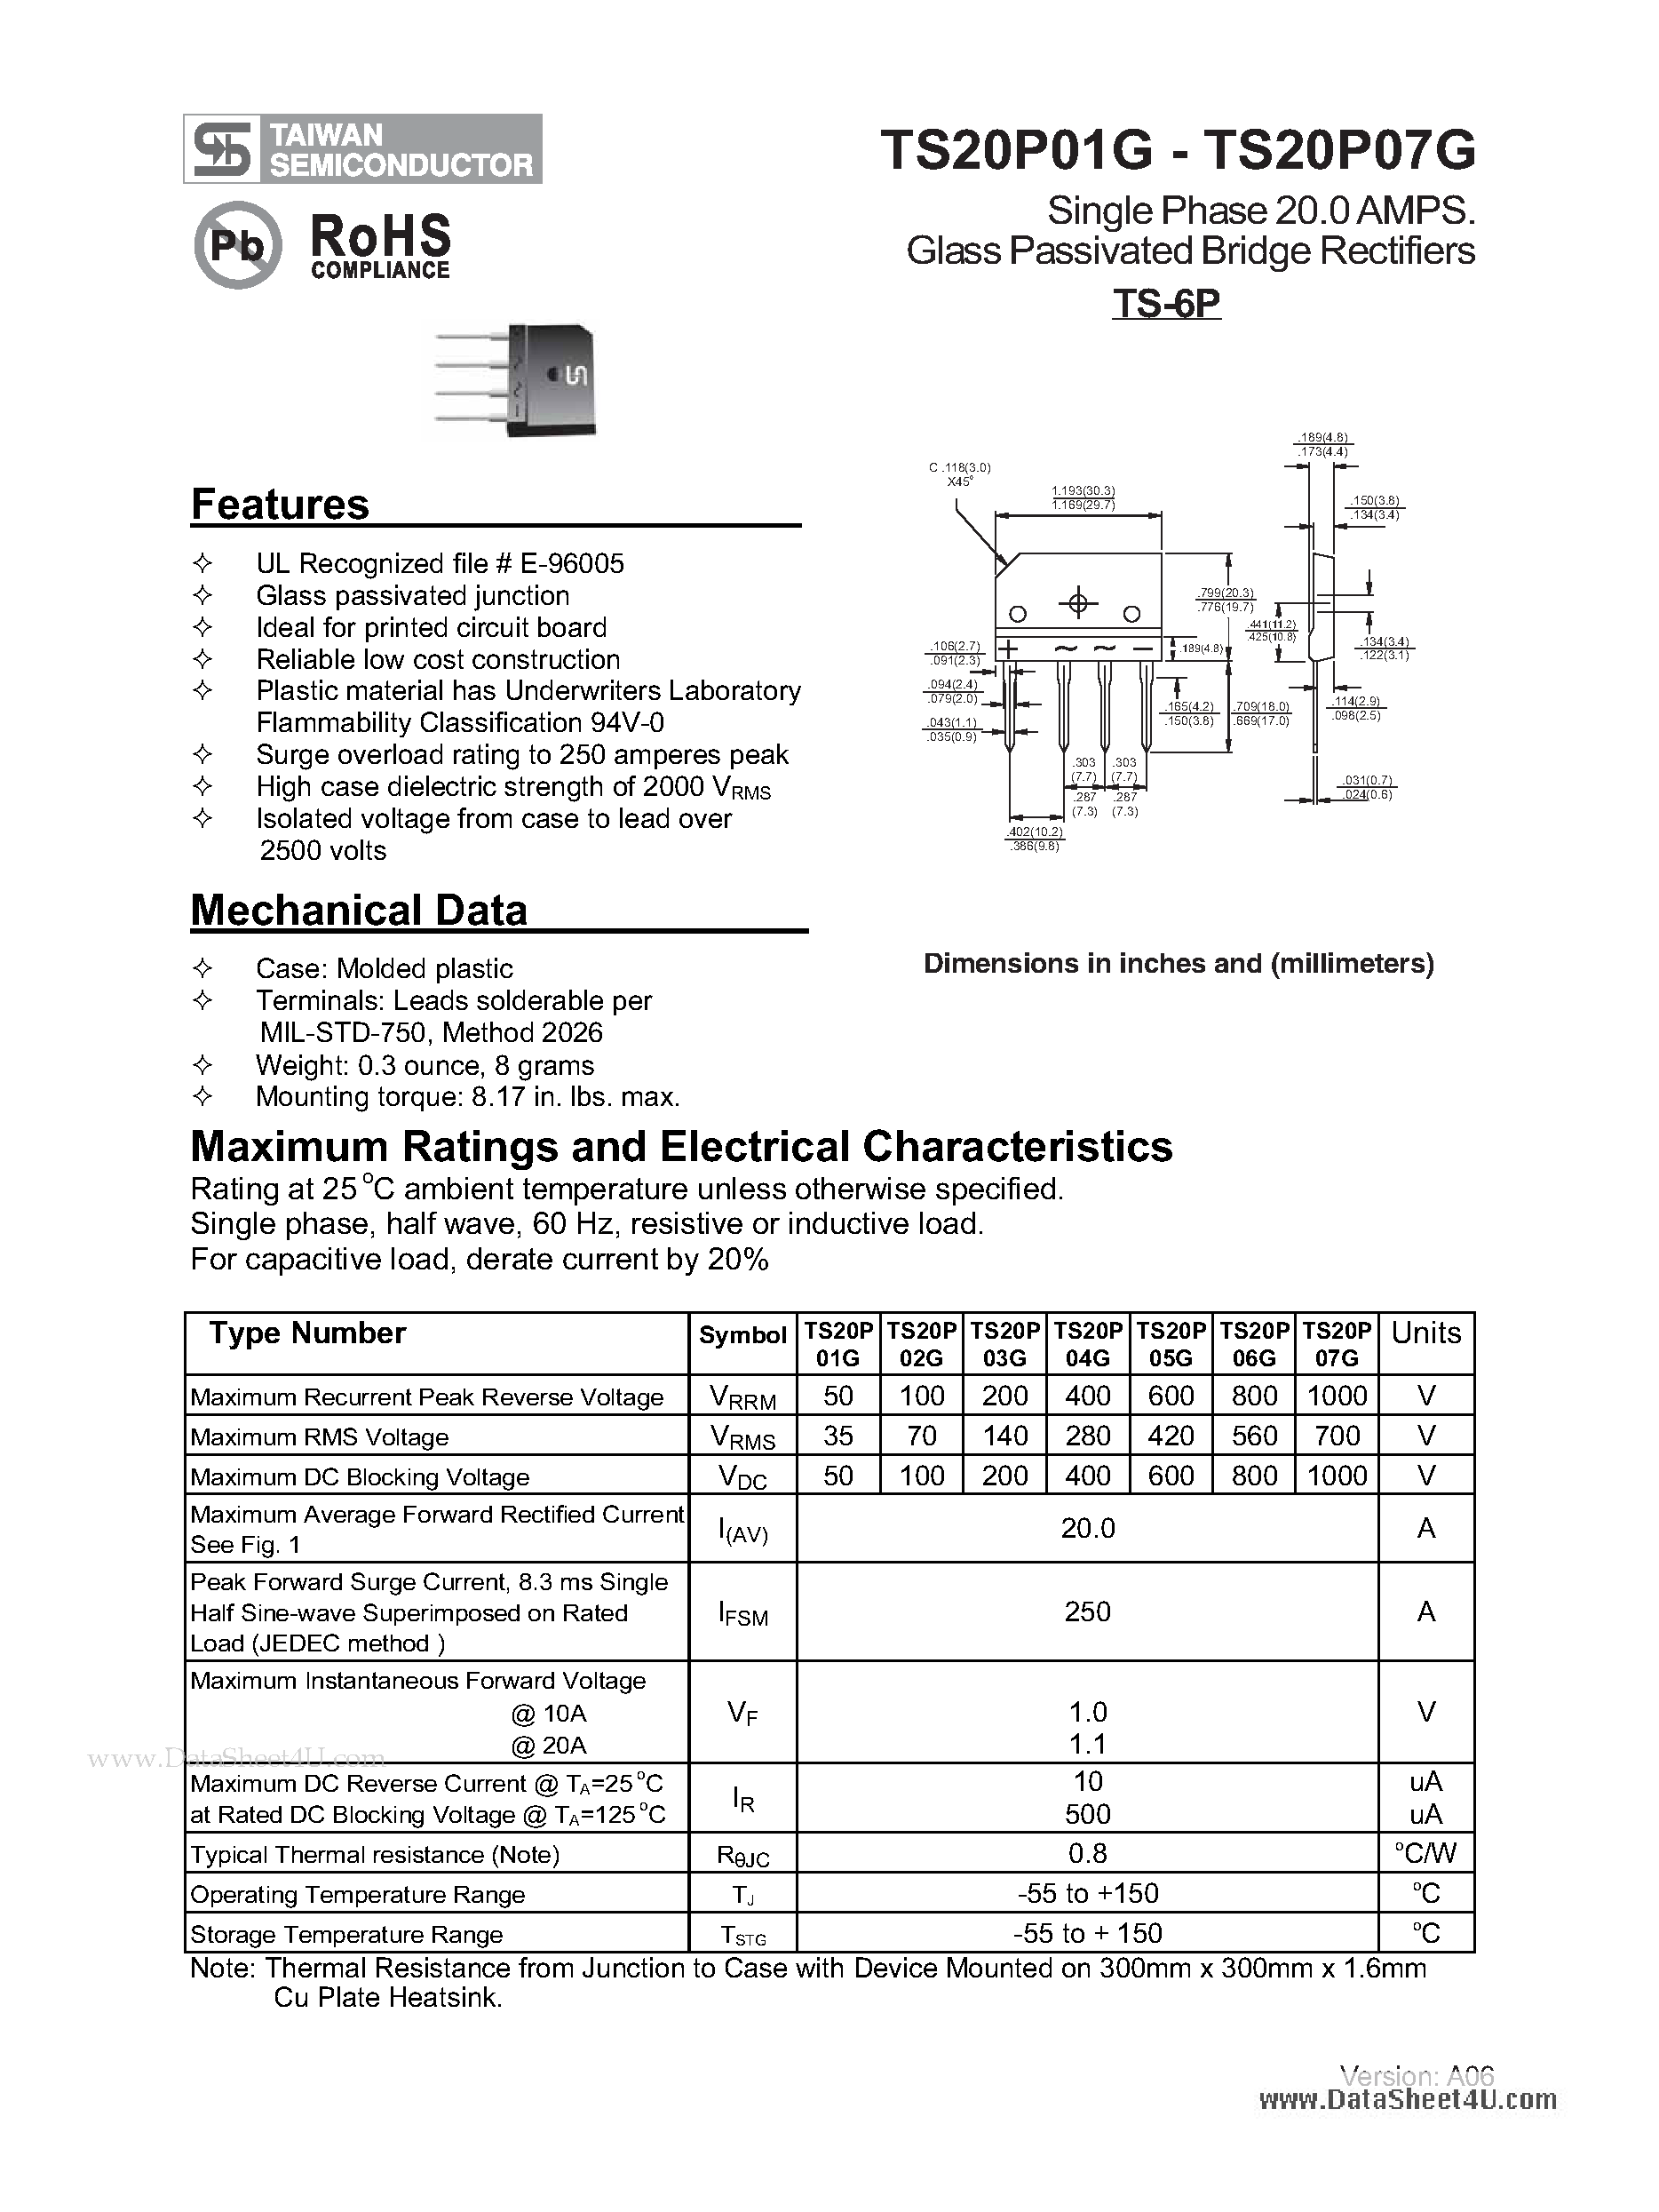 Datasheet TS20P01G - (TS20P01G - TS20P07G) Glass Passivated Bridge Rectifiers page 1